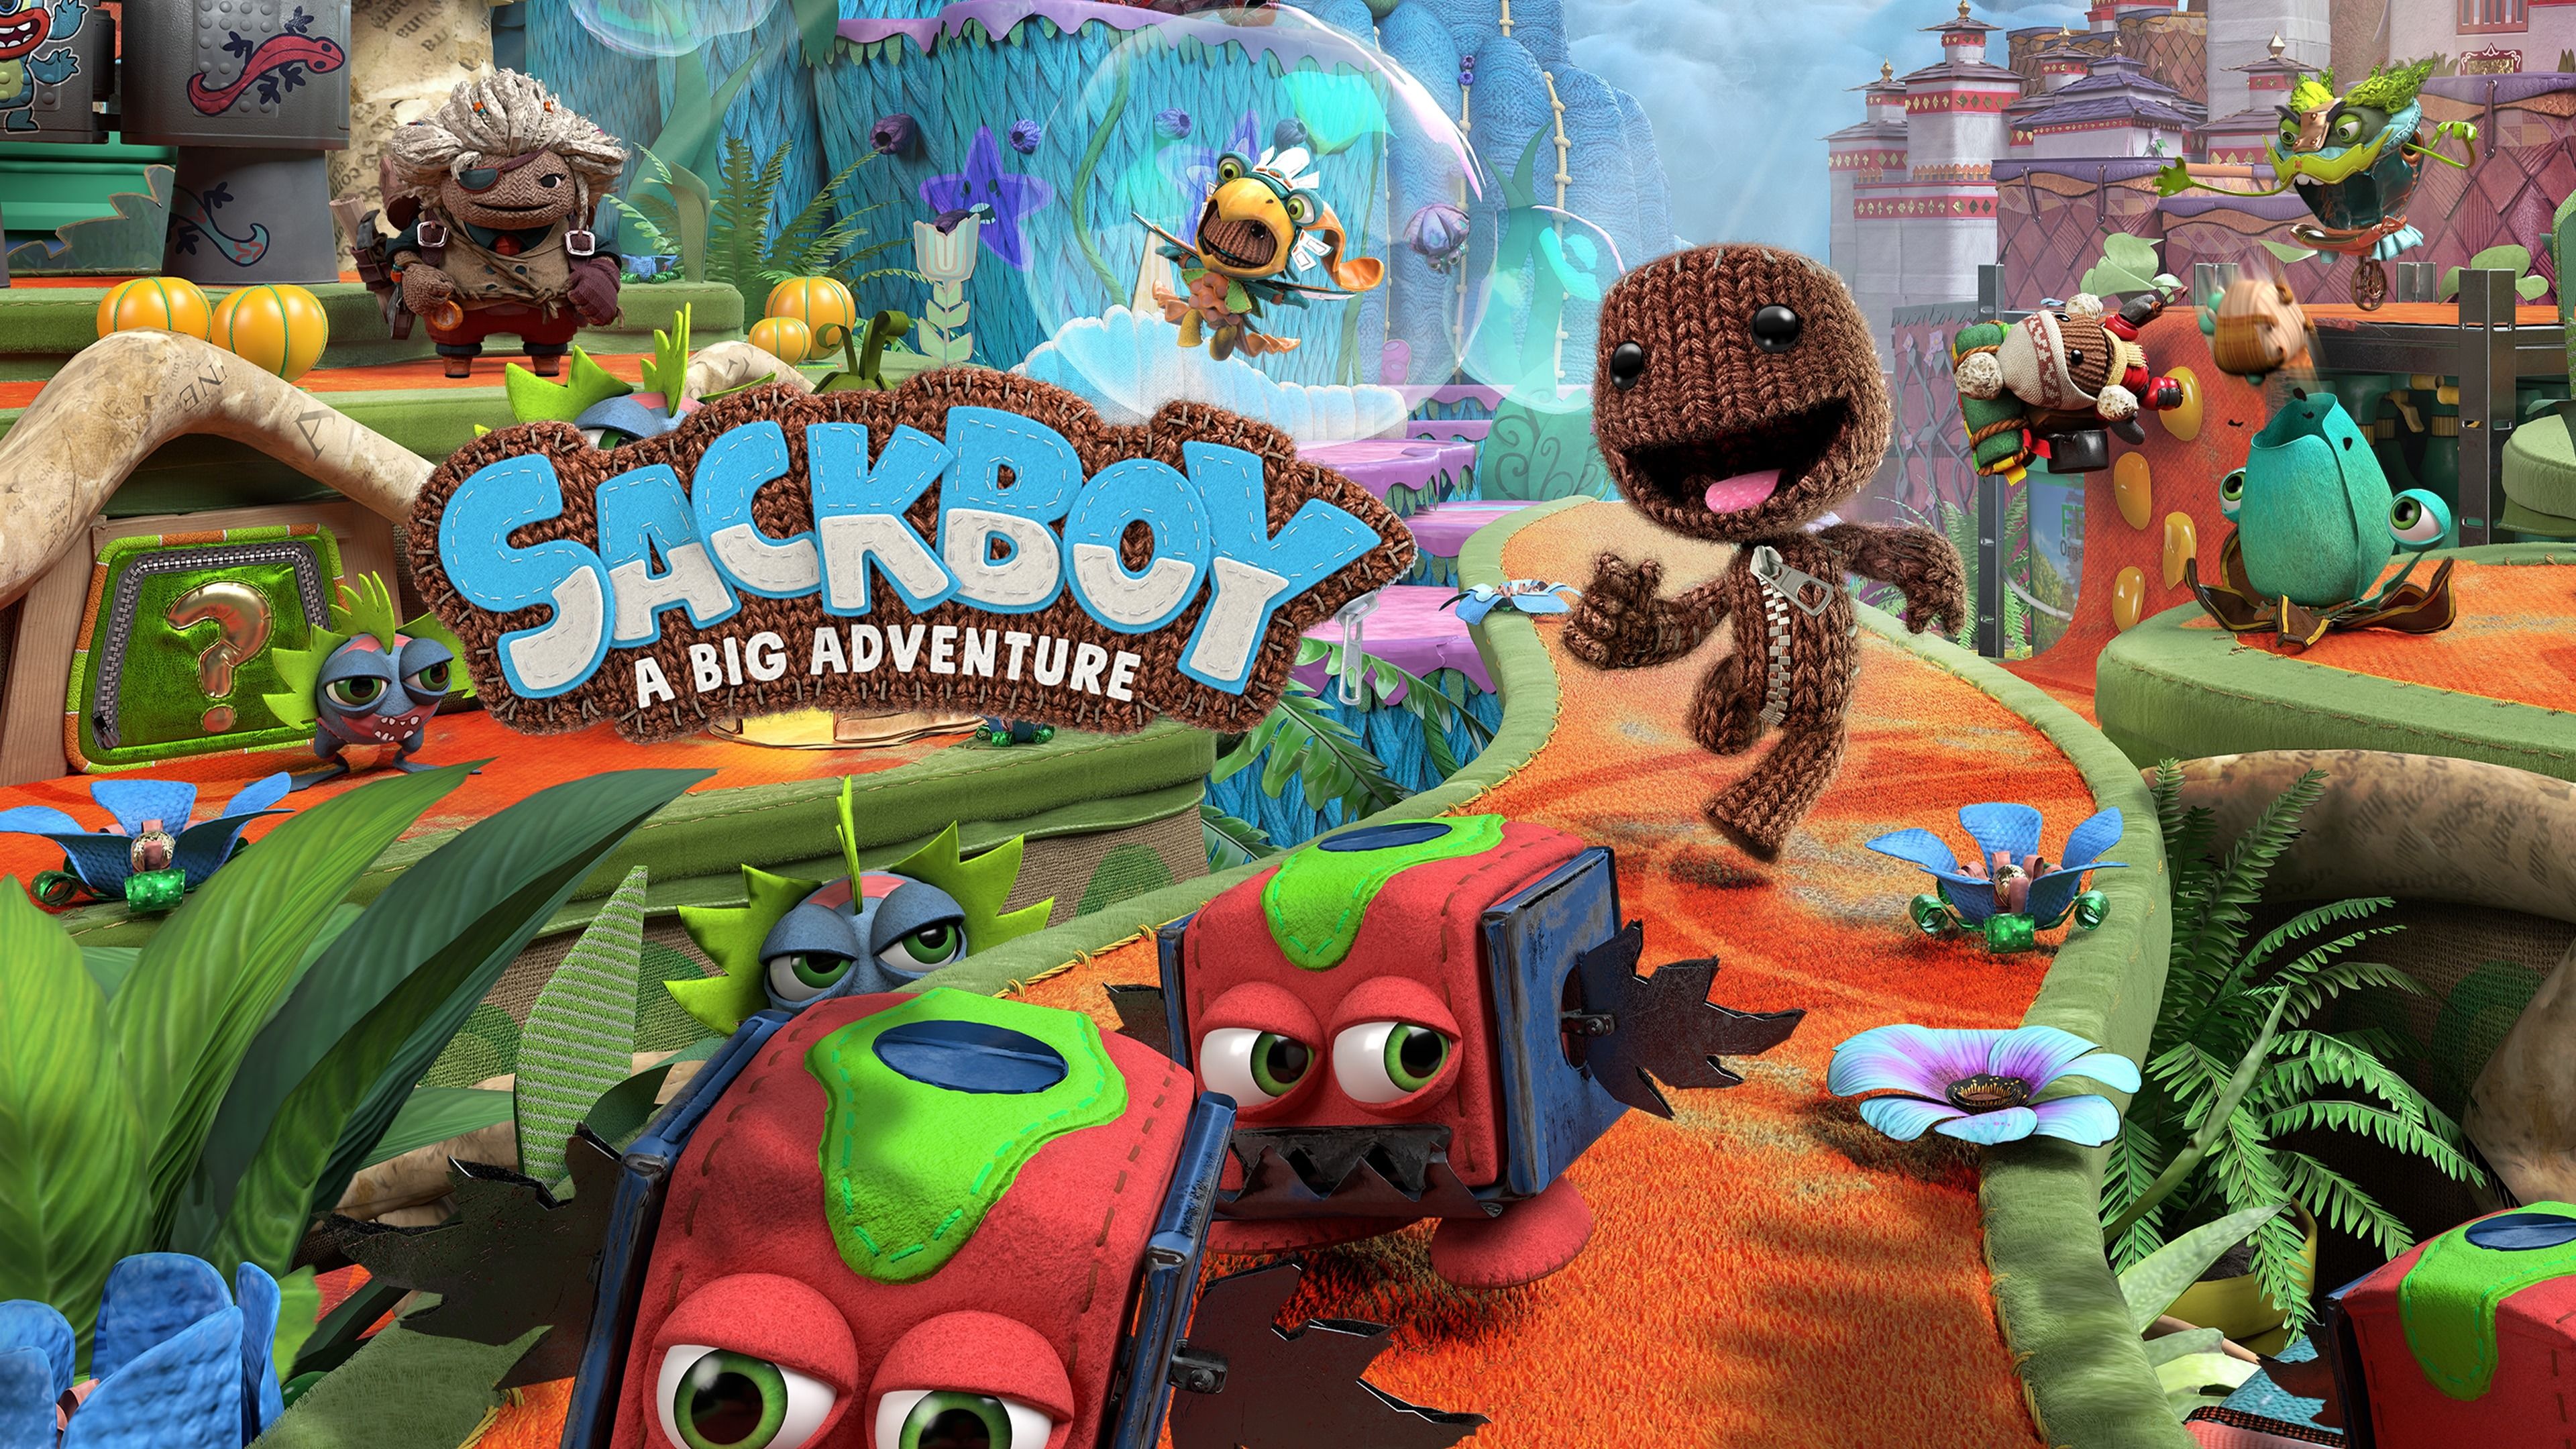 База данных Steam предполагает, что Sackboy: A Big Adventure выйдет на ПК